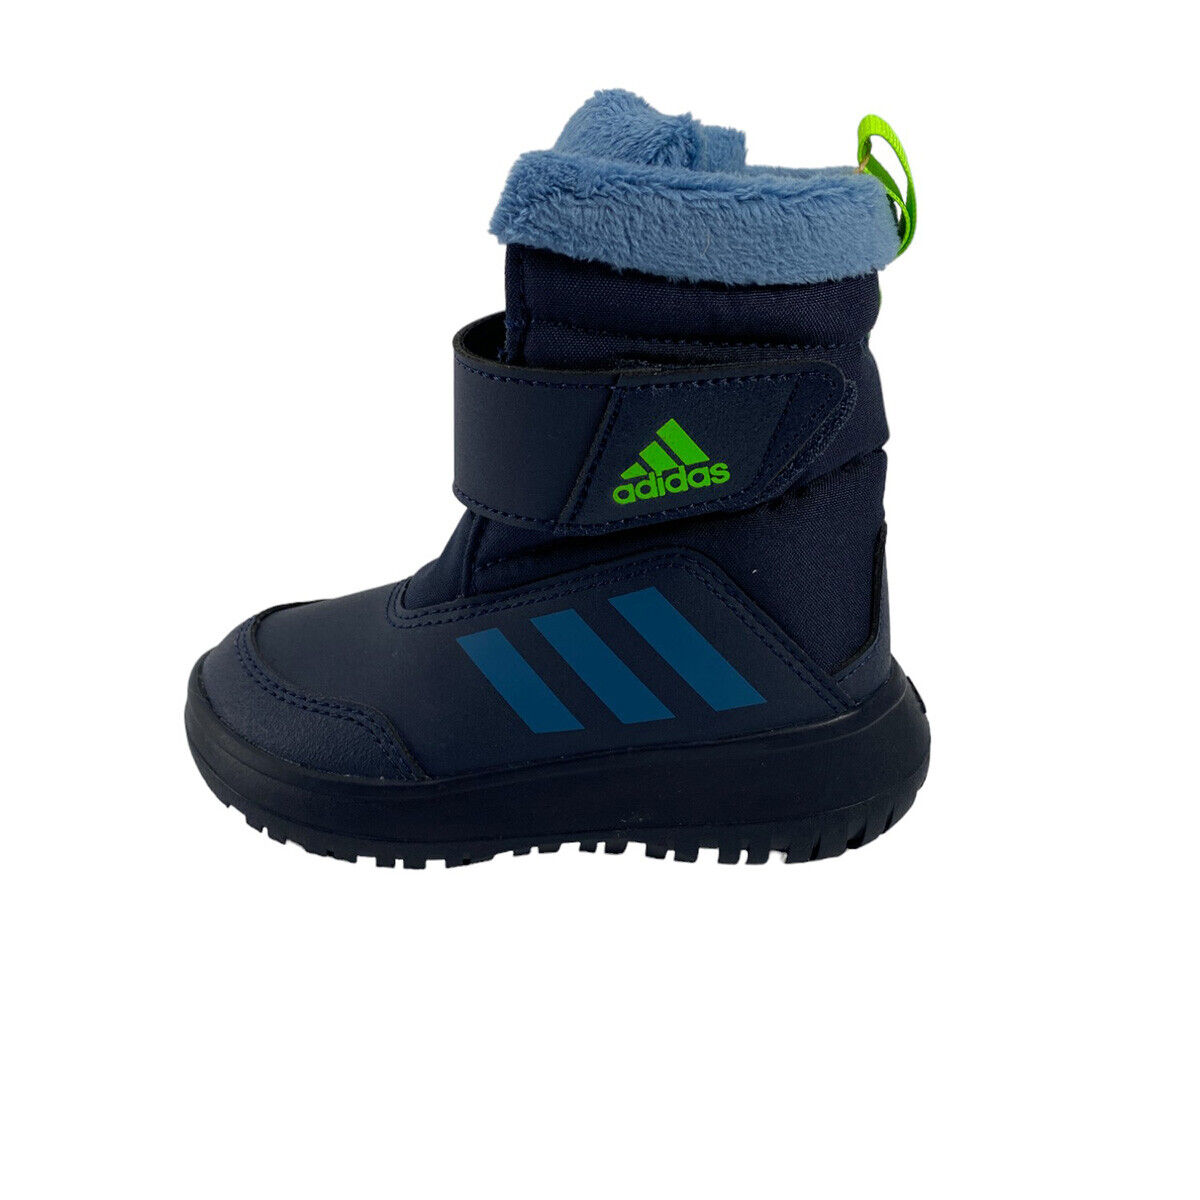 Adidas Kinder Stiefel Winterschuhe Gr. 25 Blau Neu